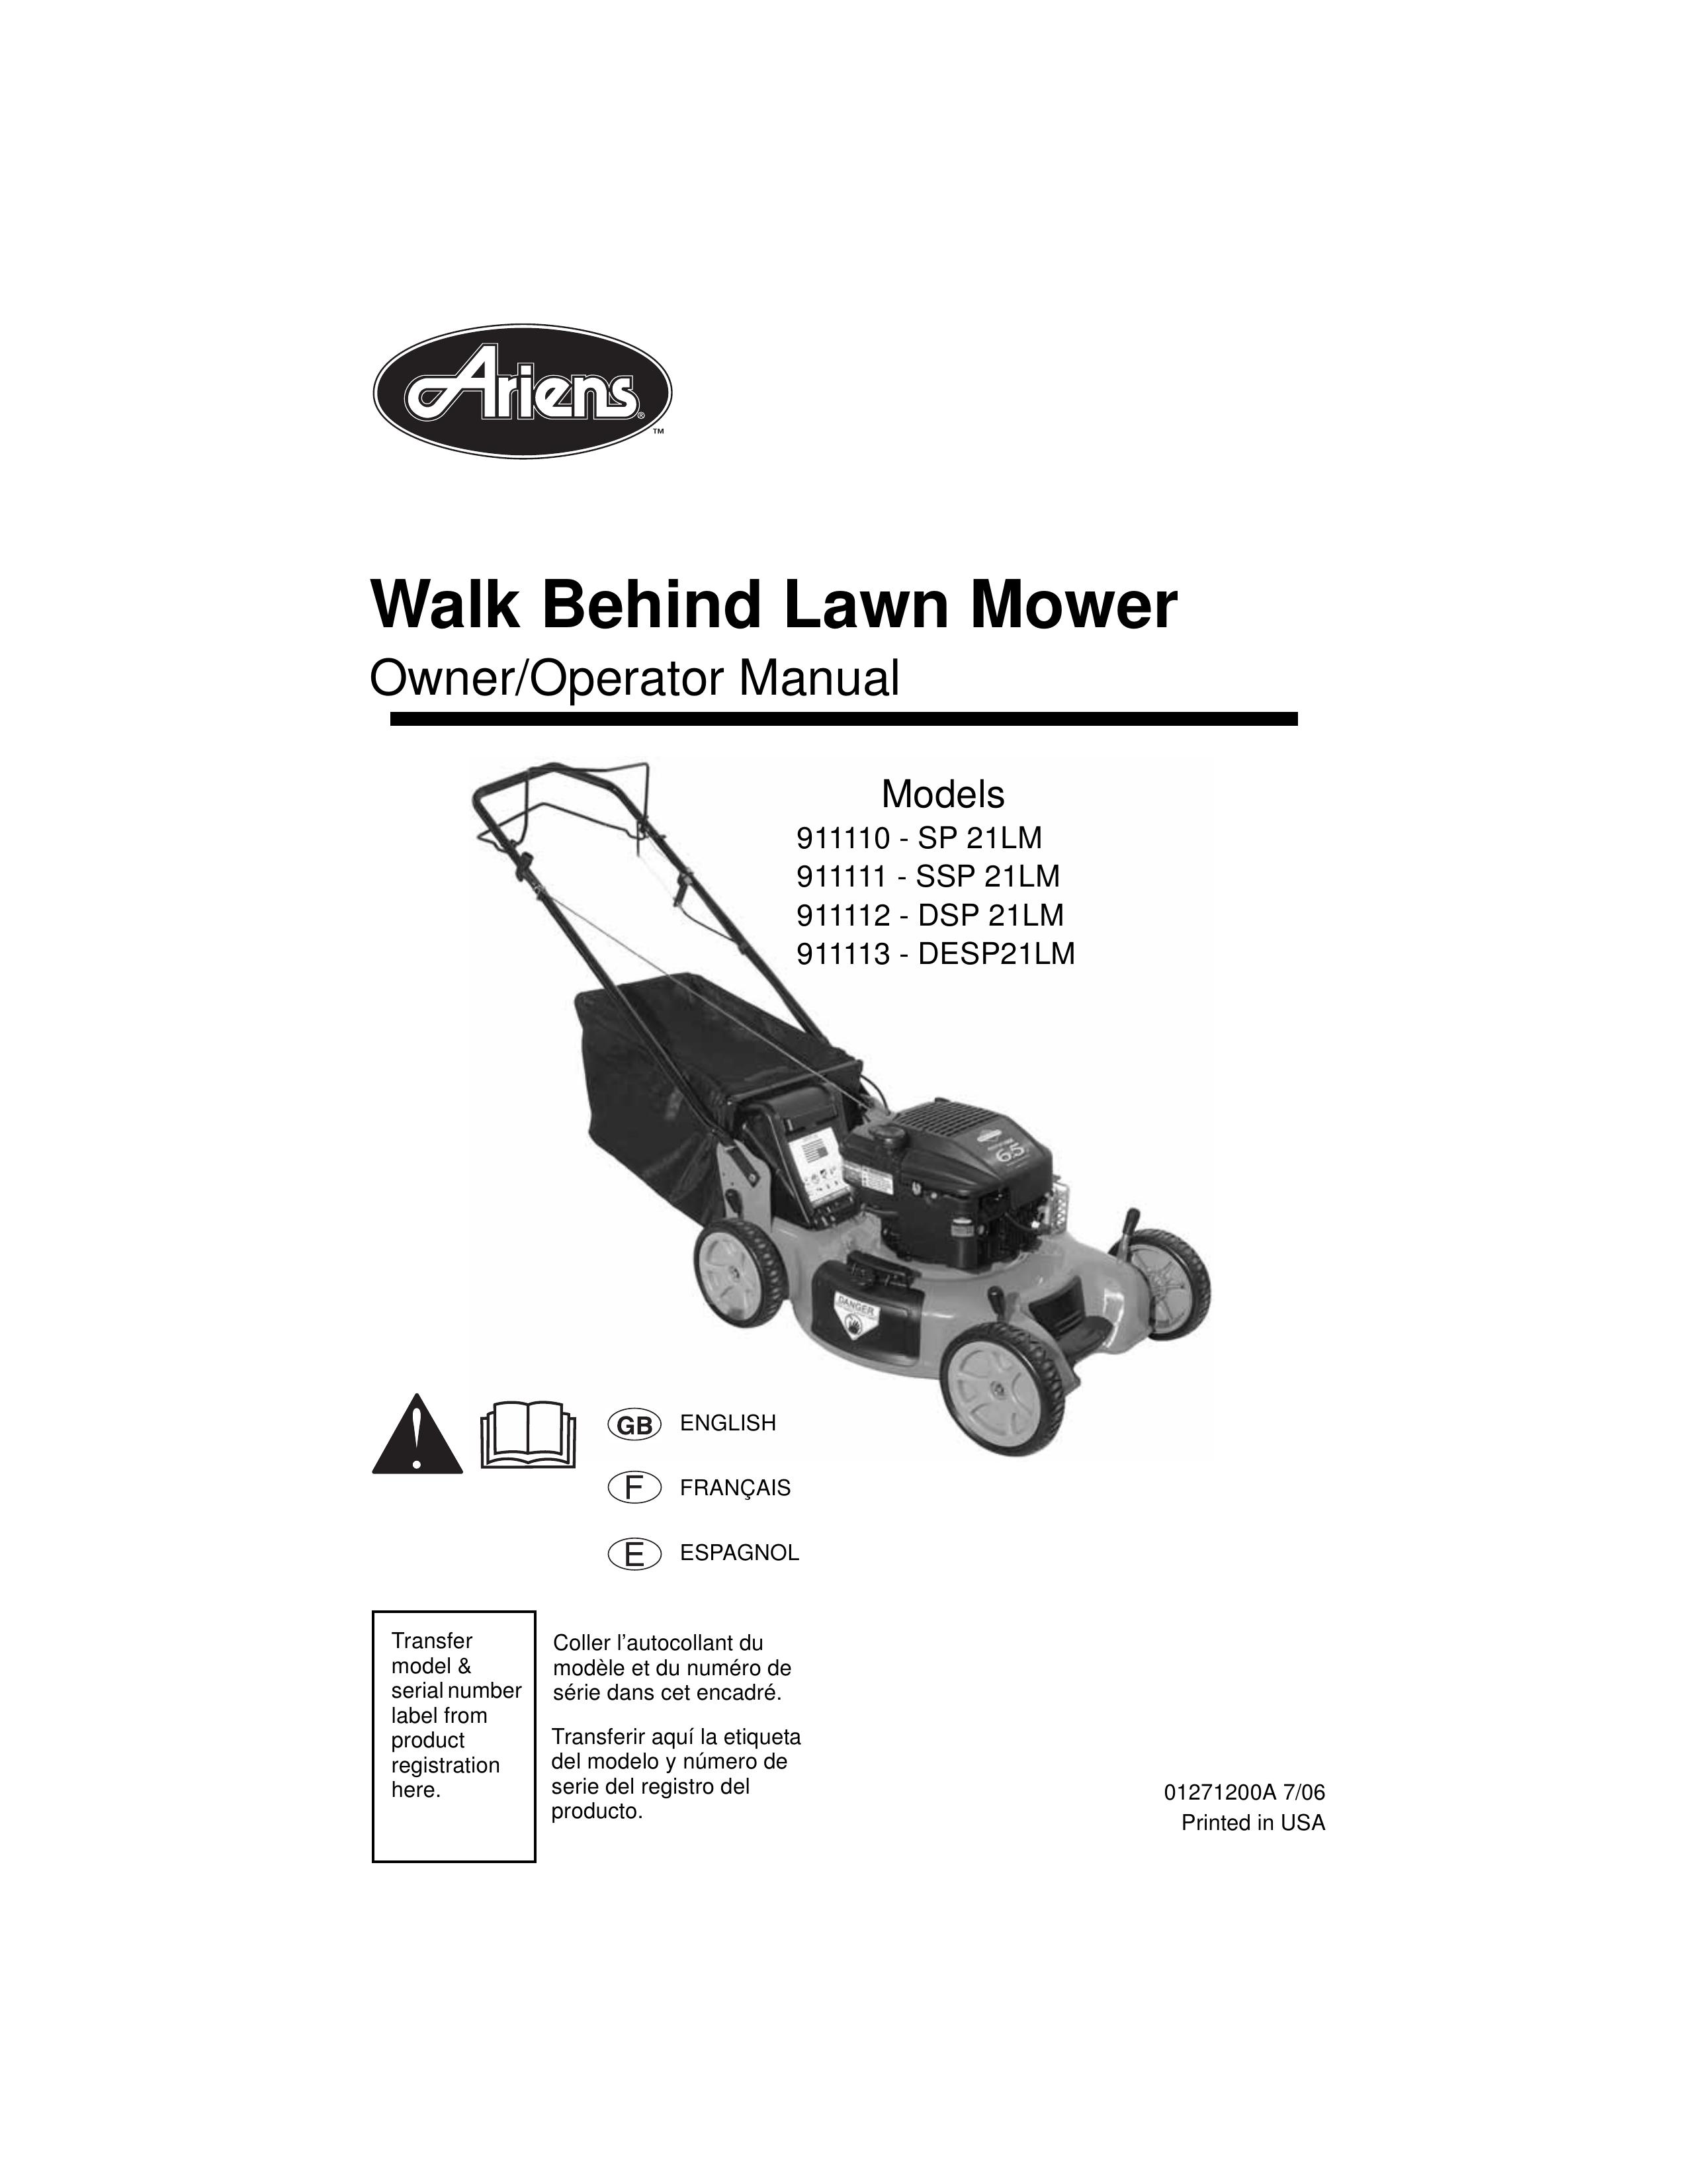 Ariens 911110 - SP 21LM Lawn Mower User Manual